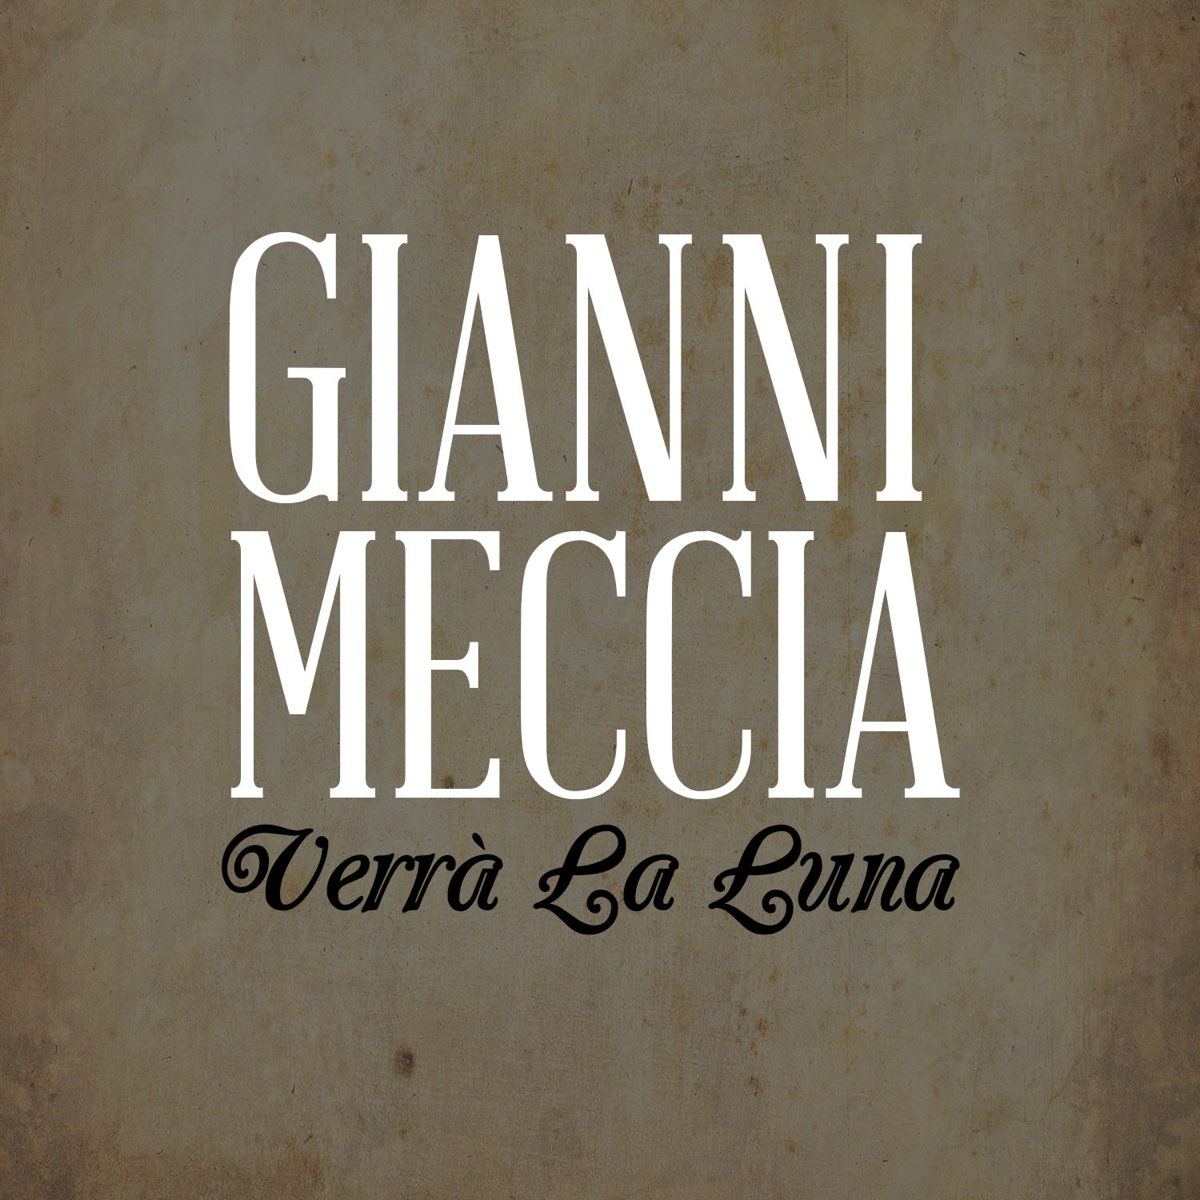 Verrà la luna - Single by Gianni Meccia on Apple Music